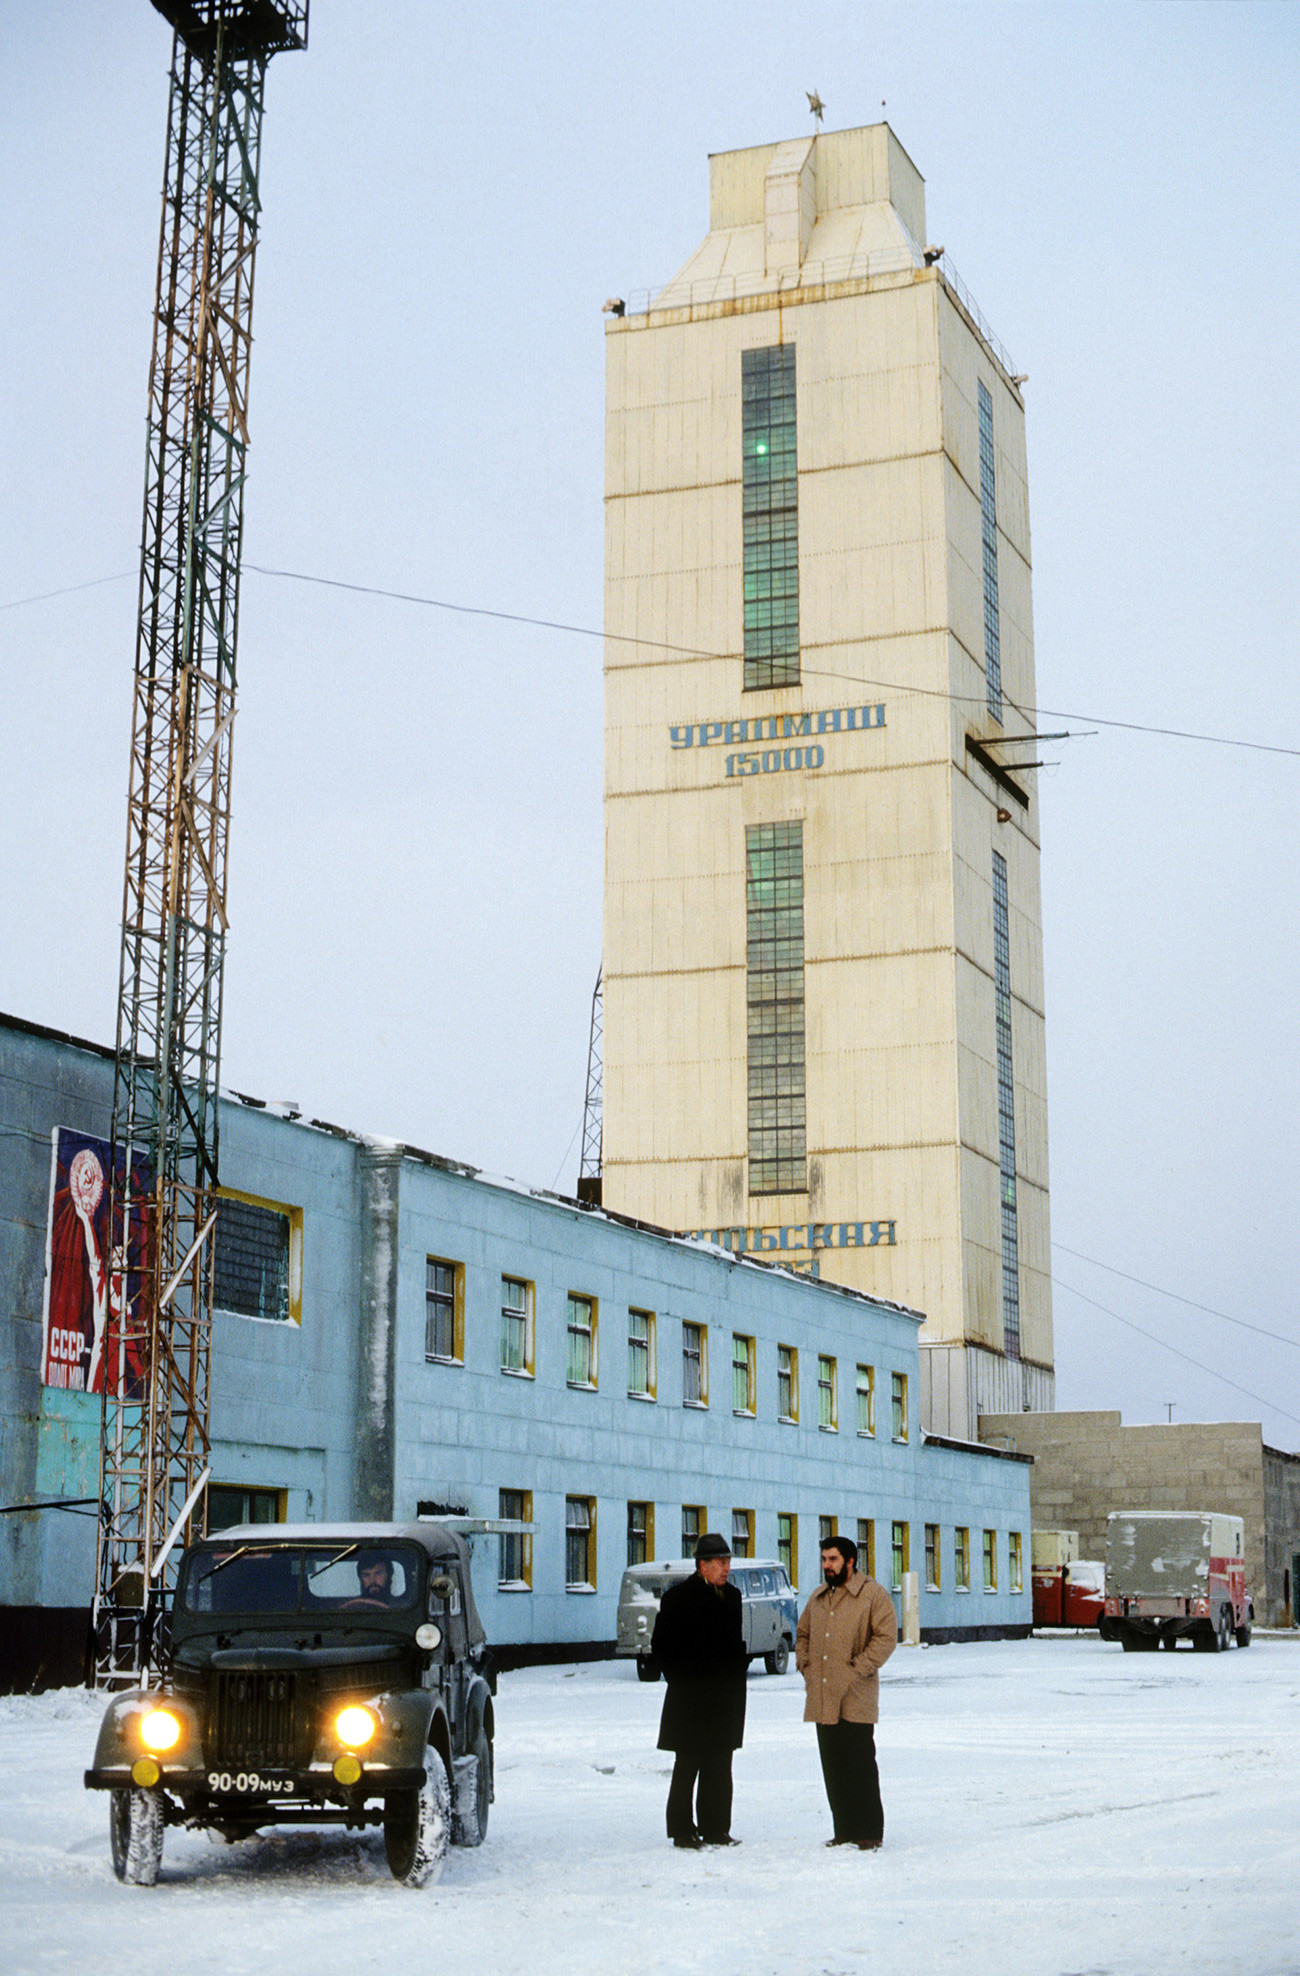 The Kola Superdeep Borehole main facility, the 1970s